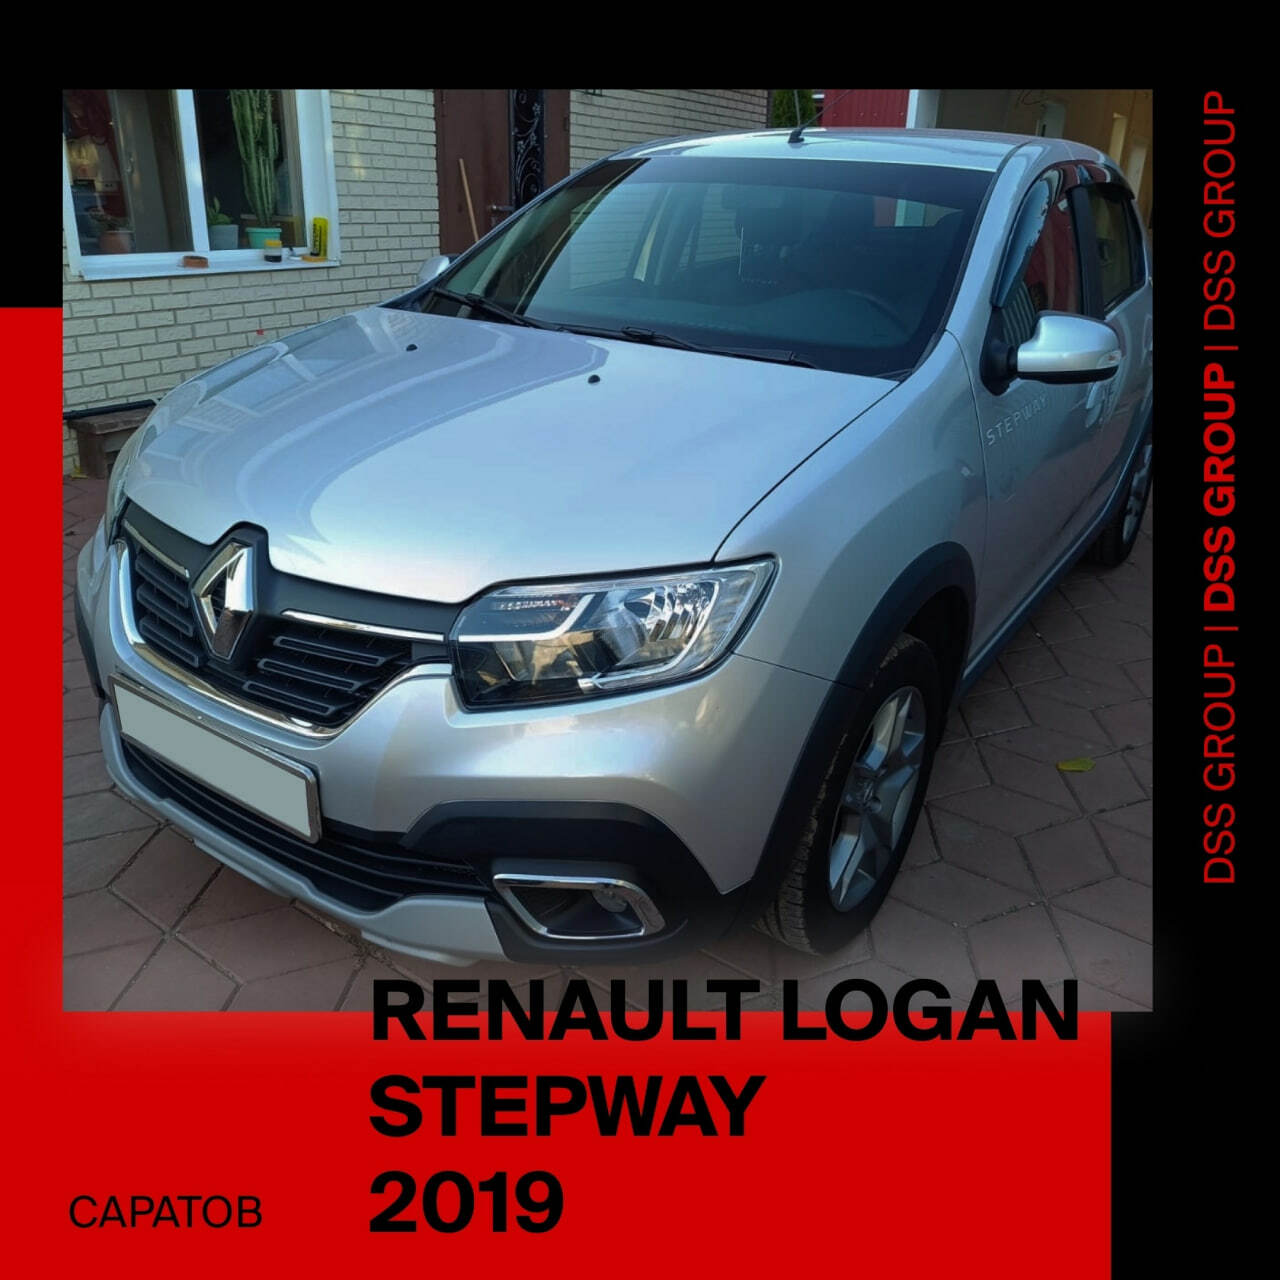 Renault Logan Stepway 2019